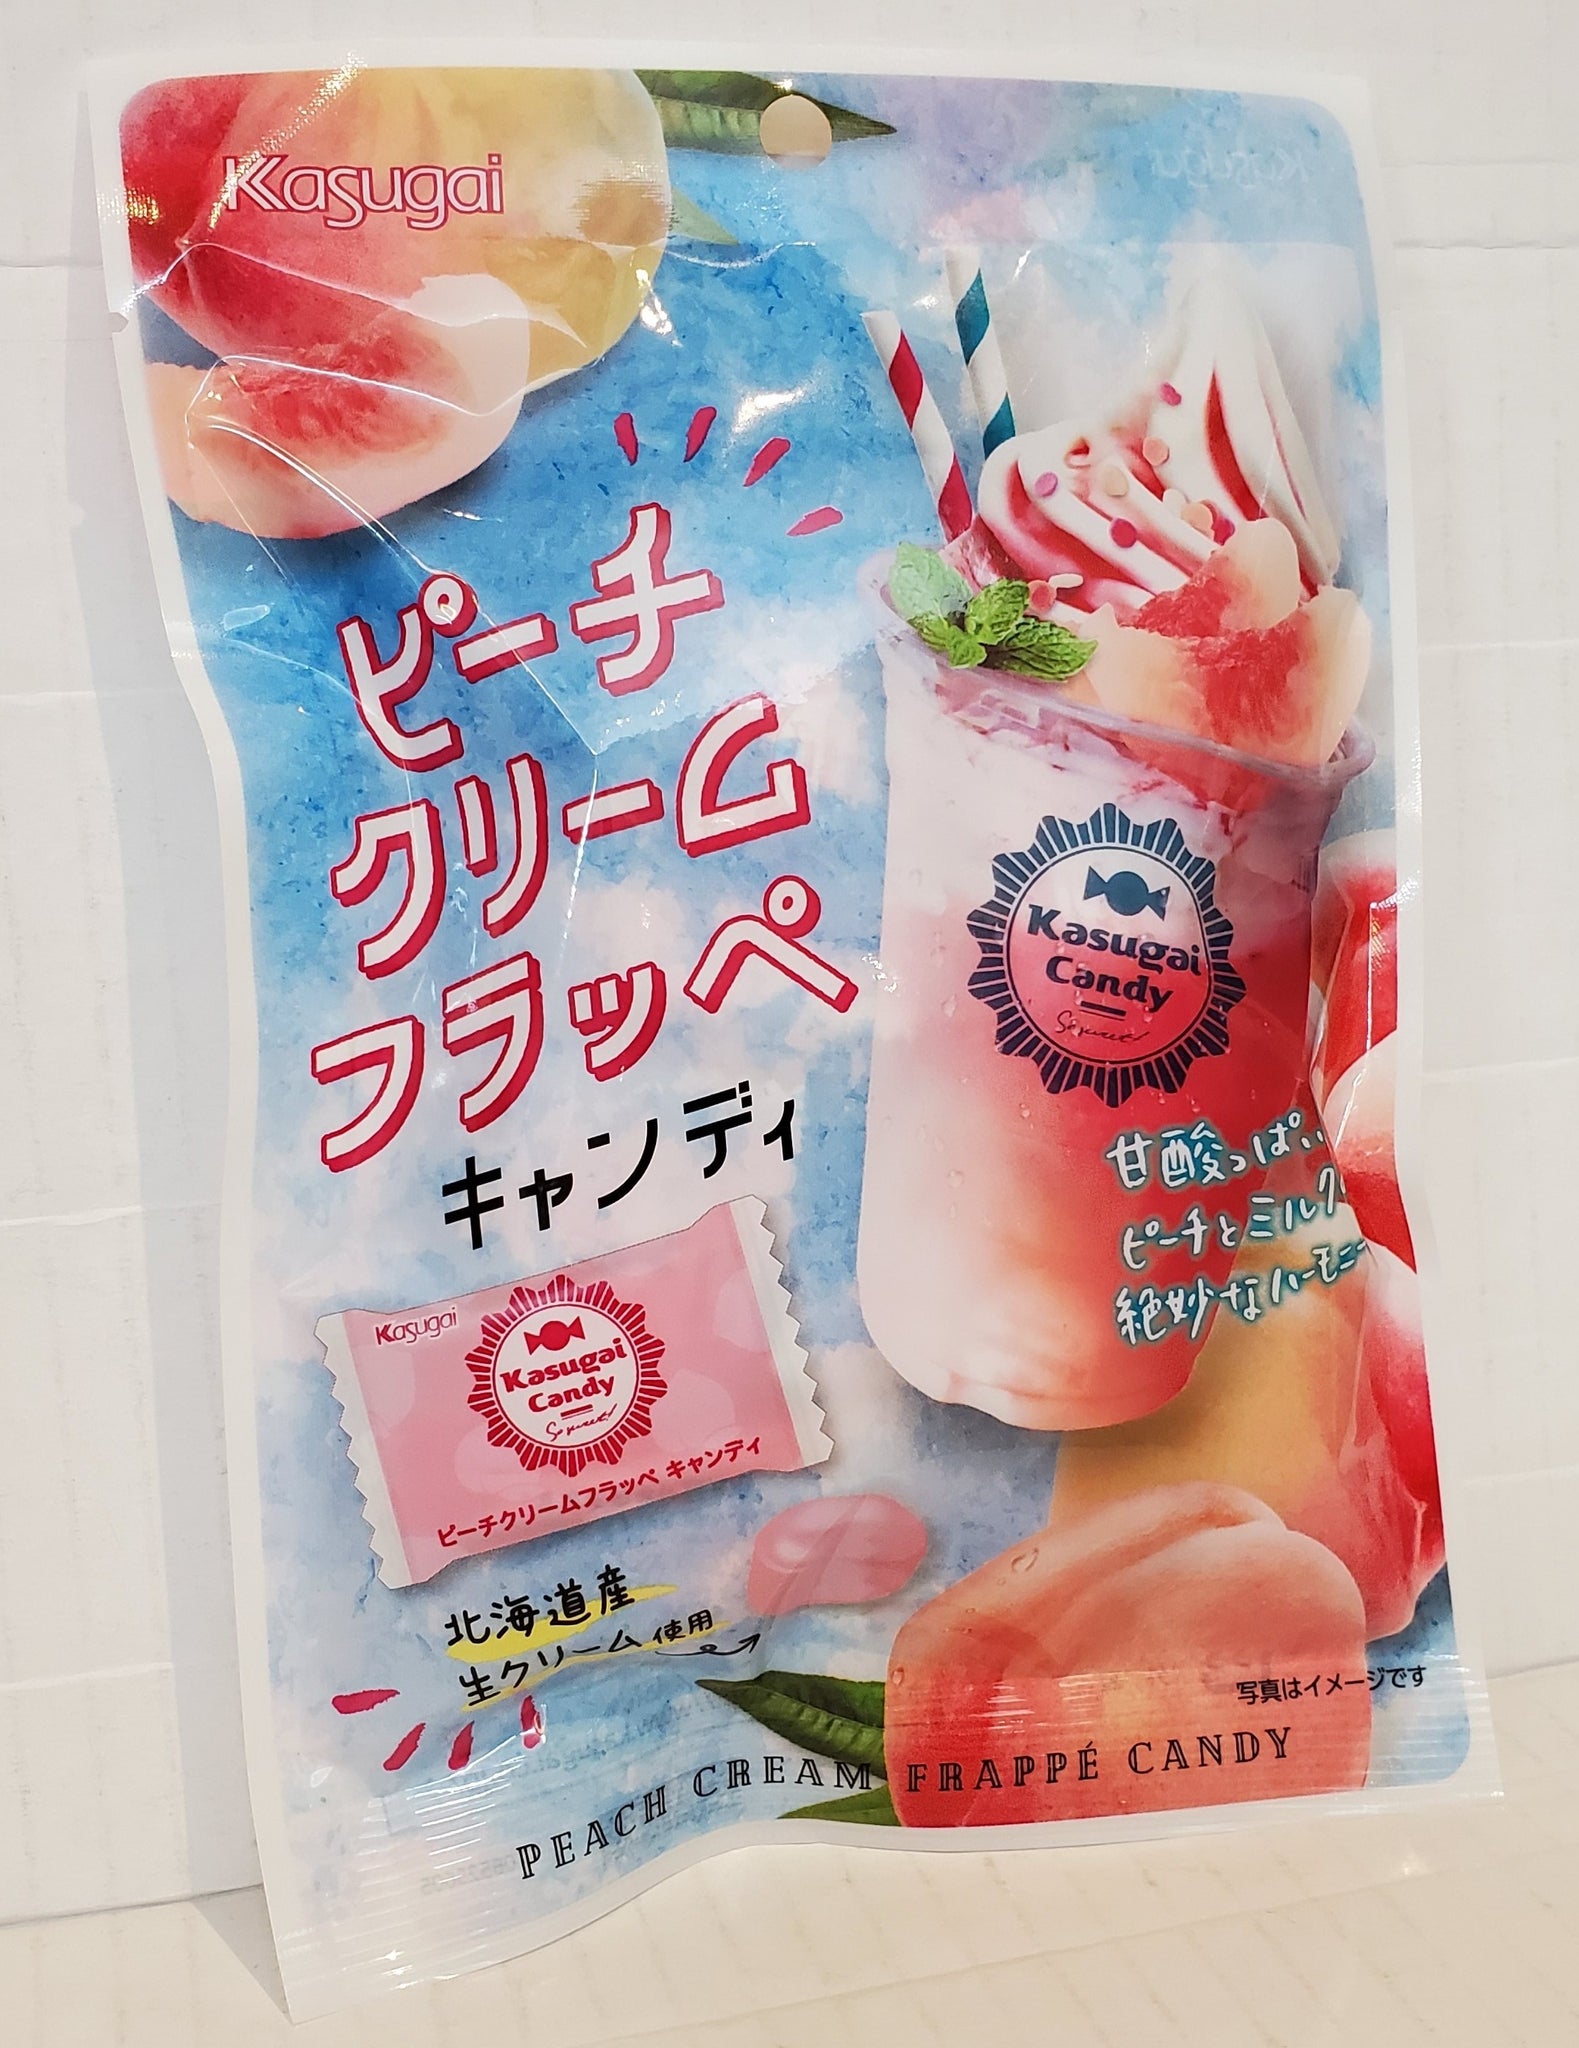 Kasugai peach cream frappe candy 春日井蜜桃忌廉雪冰砂糖